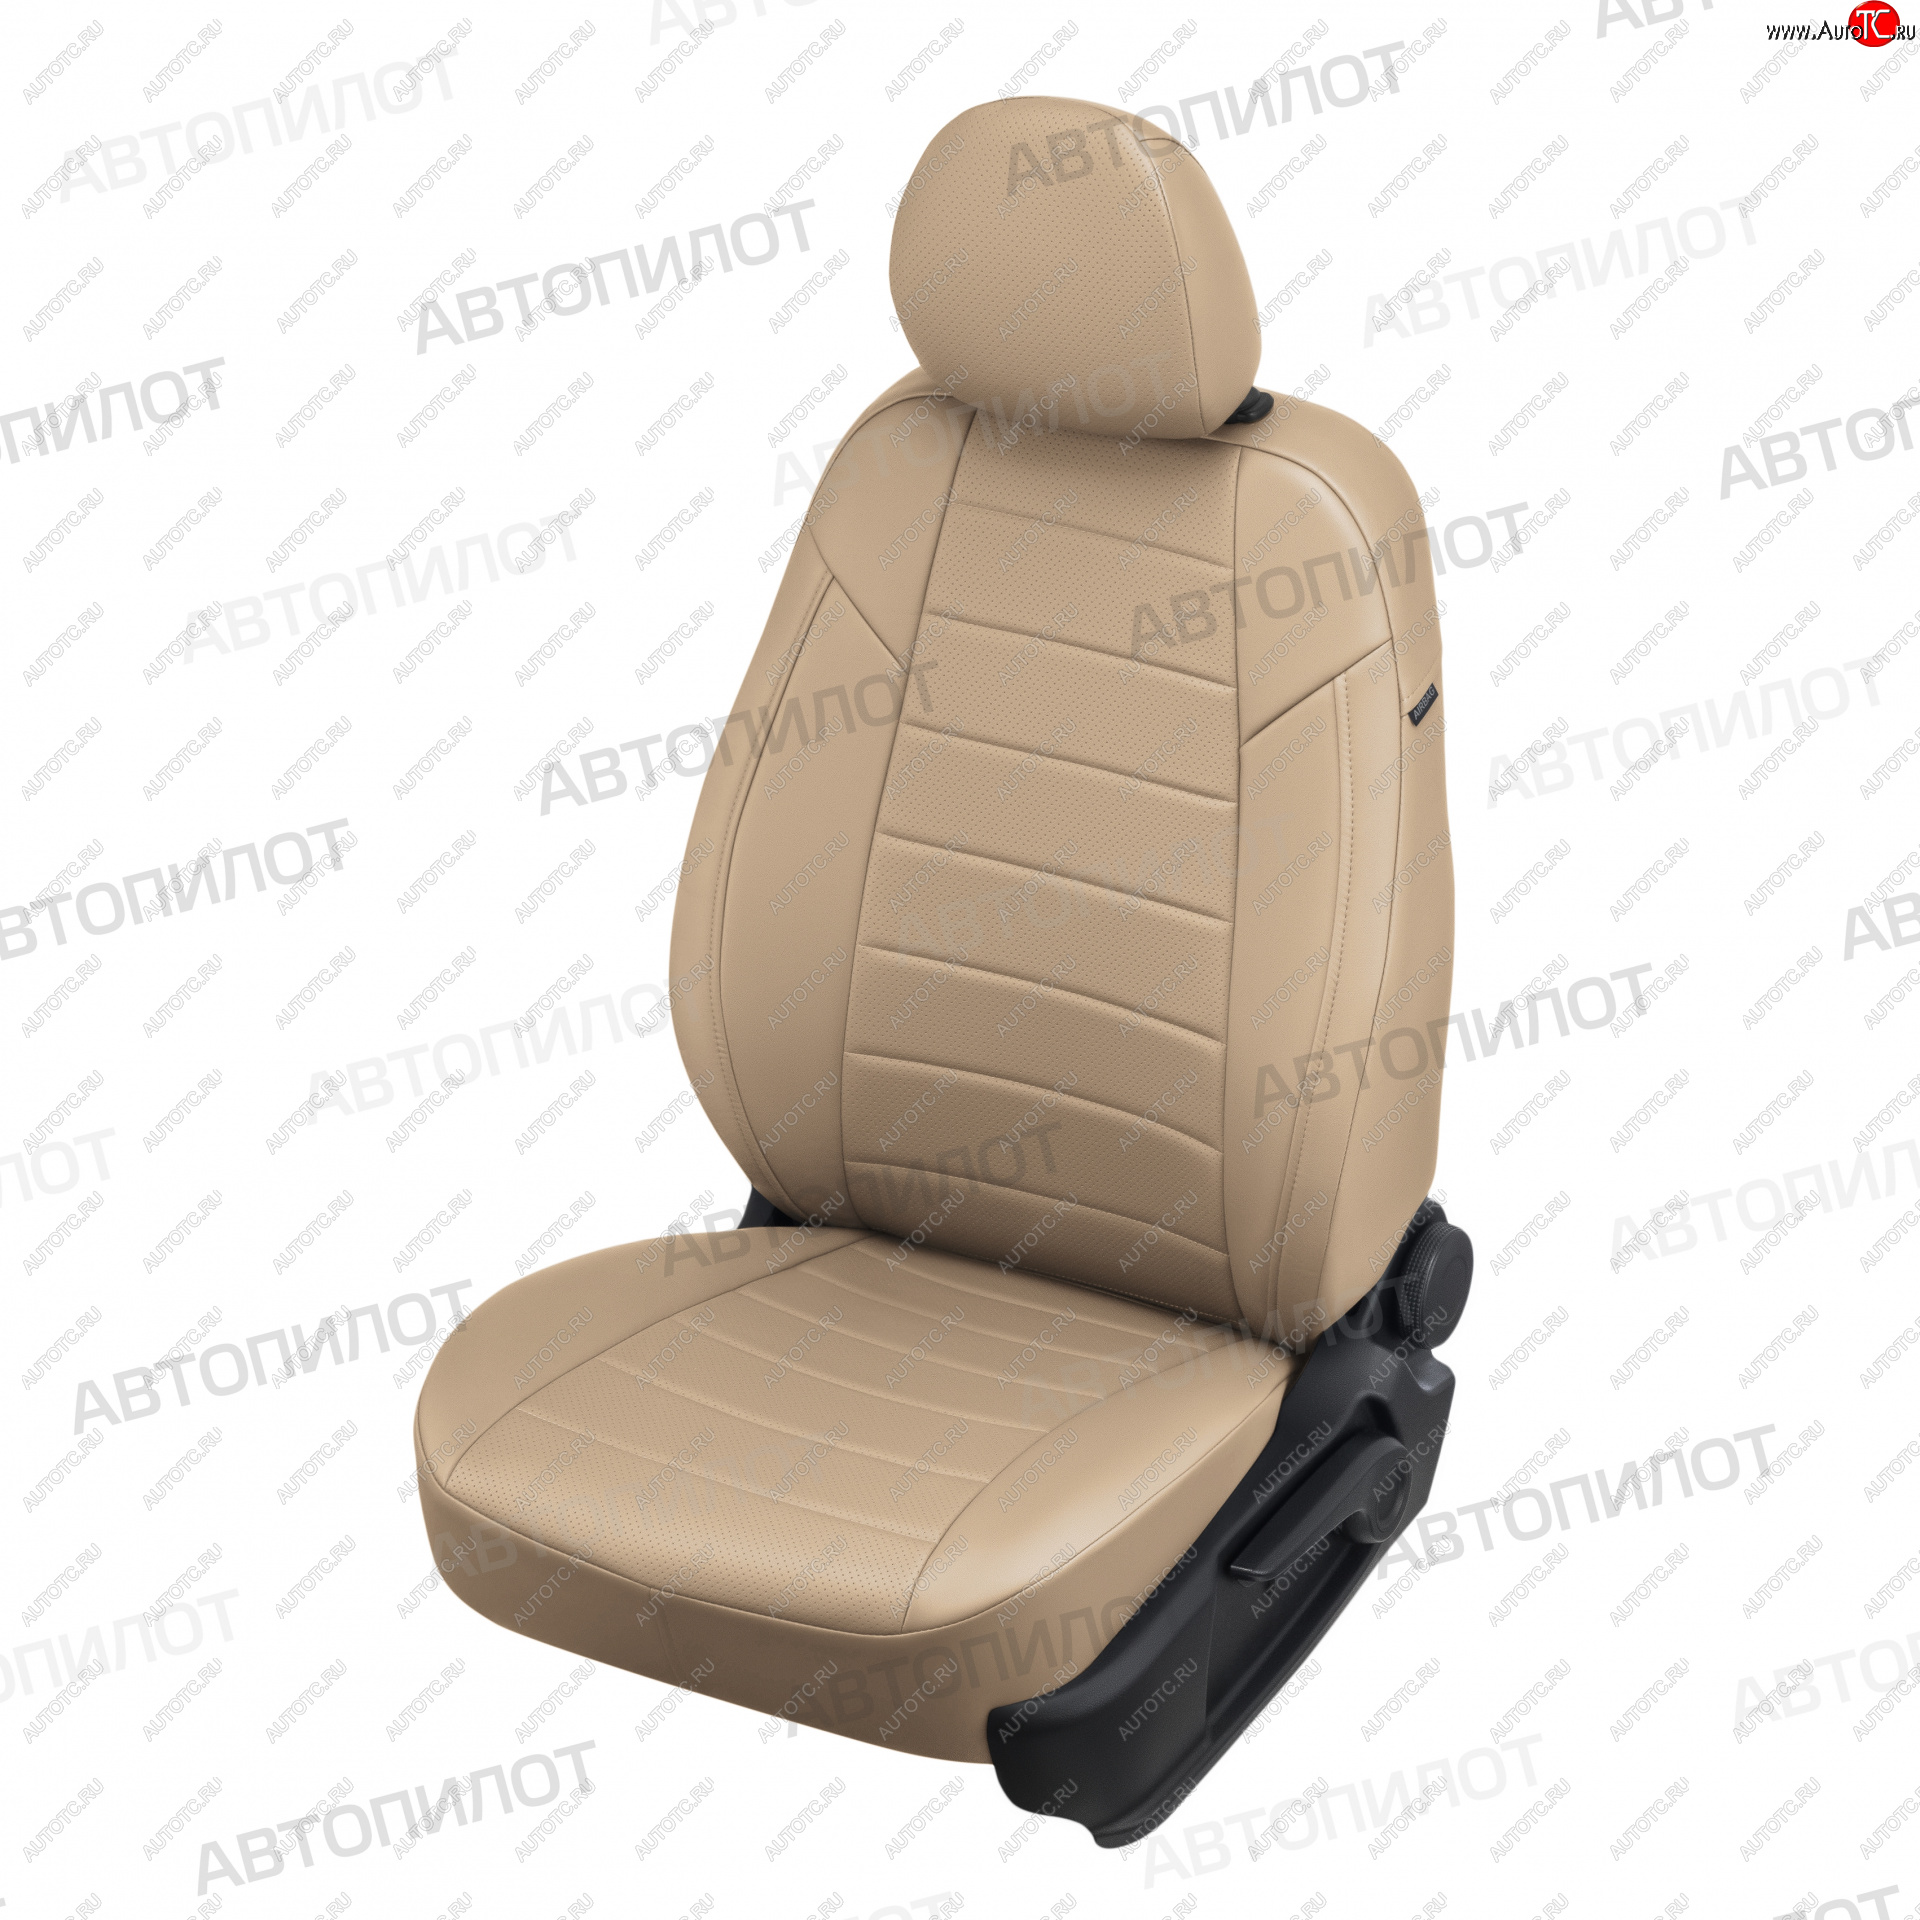 13 849 р. Чехлы сидений (5 мест, экокожа) Автопилот  Ford Galaxy  2 (2006-2015) (темно-бежевый)